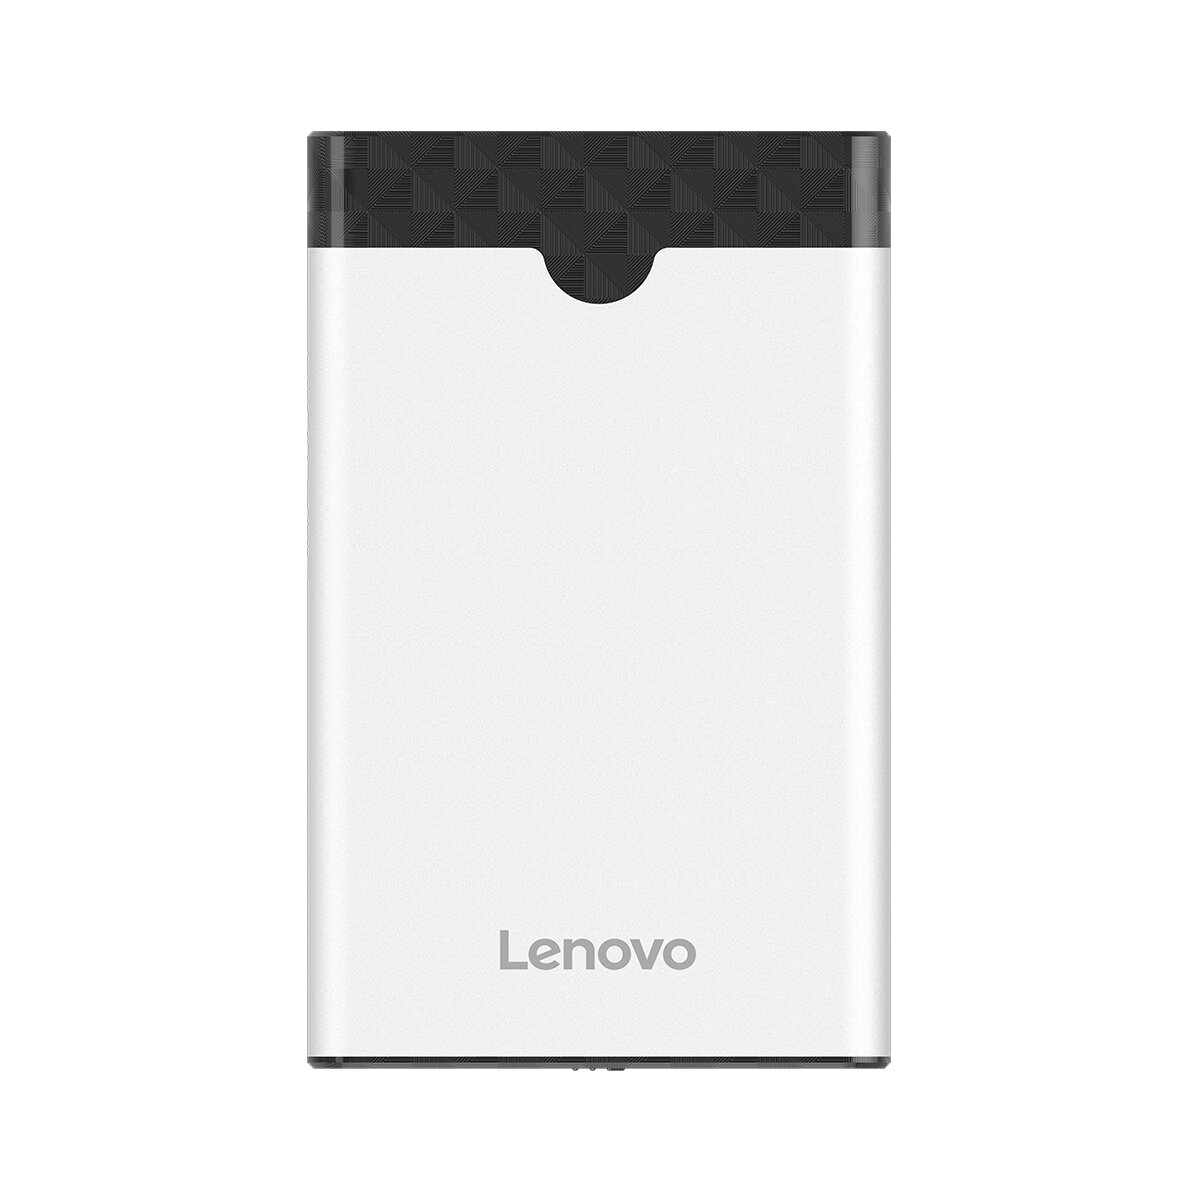 

Lenovo S-03 2.5 inch HDD Enclosure SATA3.0 Portable External Hard Disk Box Hard Drive Case for Windows Mac Linux